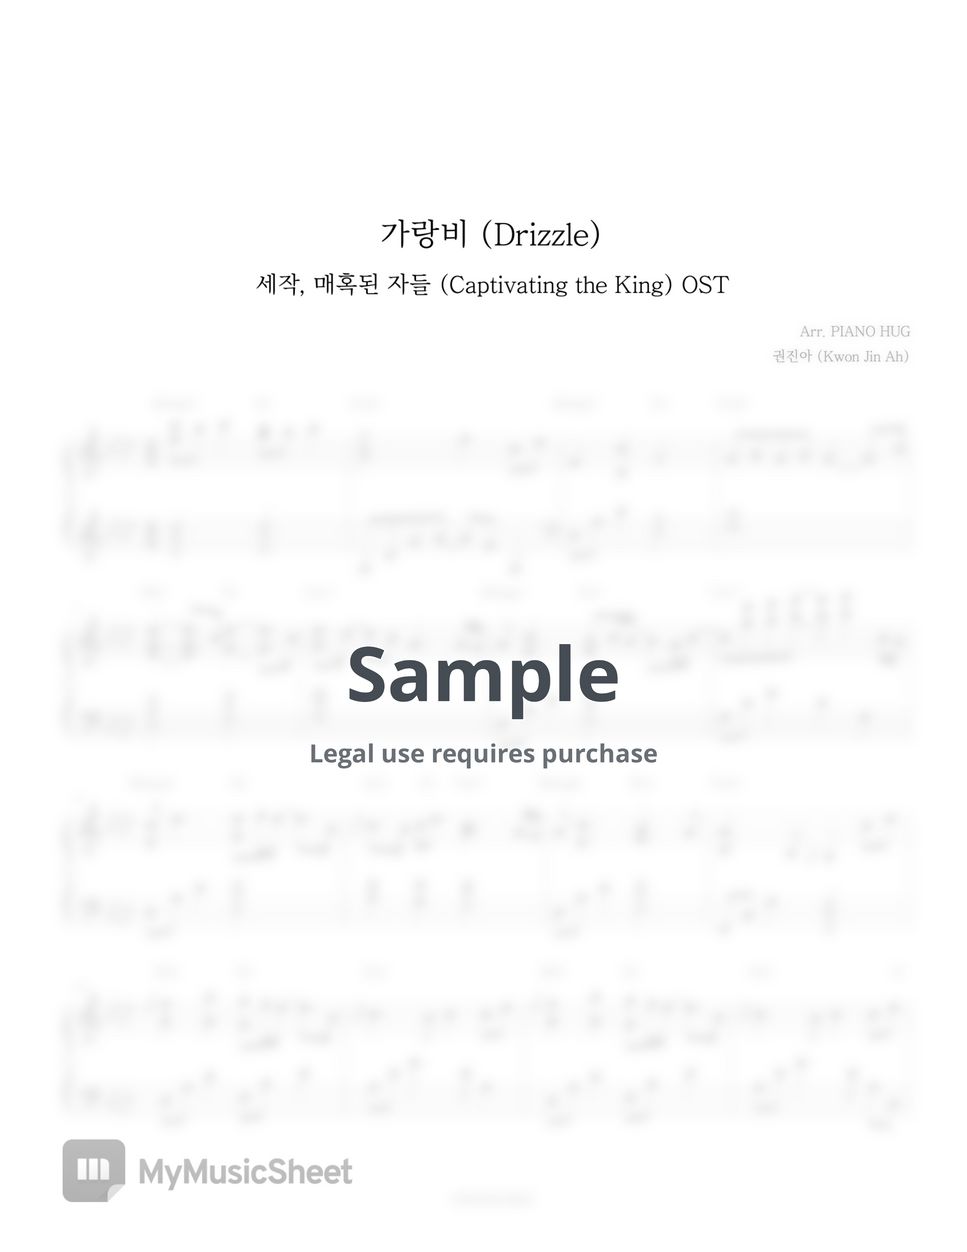 Kown Jin Ah (권진아) - Drizzle (가랑비) (Captivating the king OST) (세작, 매혹된 자들 OST) by Piano Hug